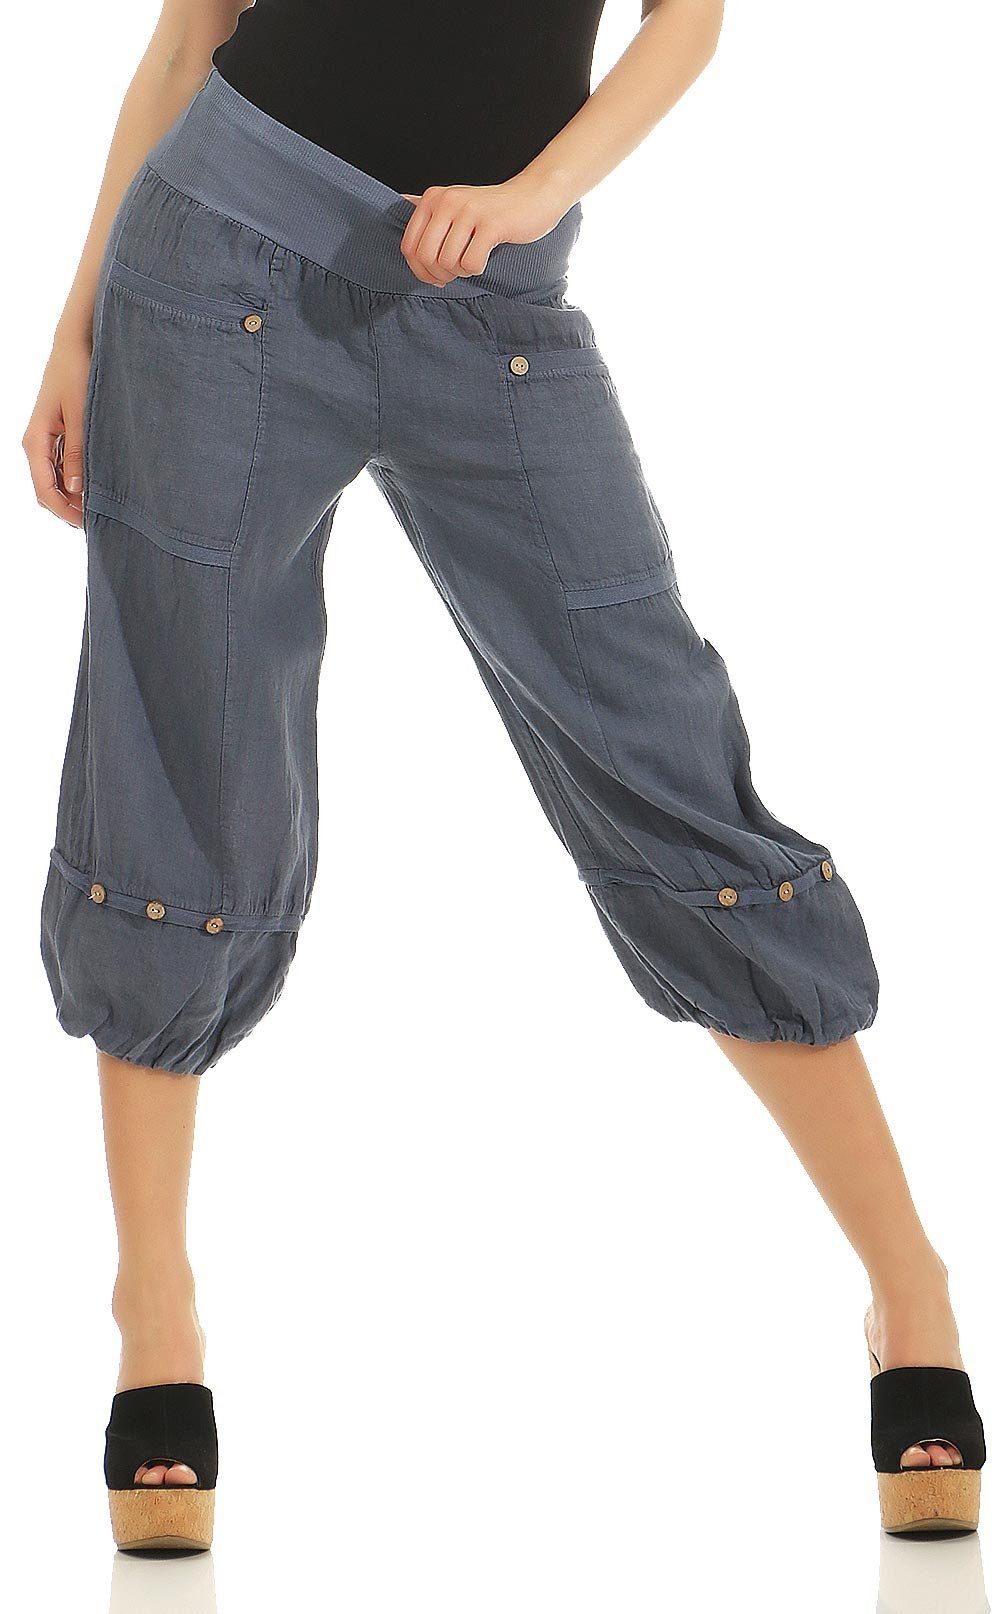 malito more than fashion Caprihose 1575 Damen 3/4 Leinenhose jeansblau | Stoffhosen